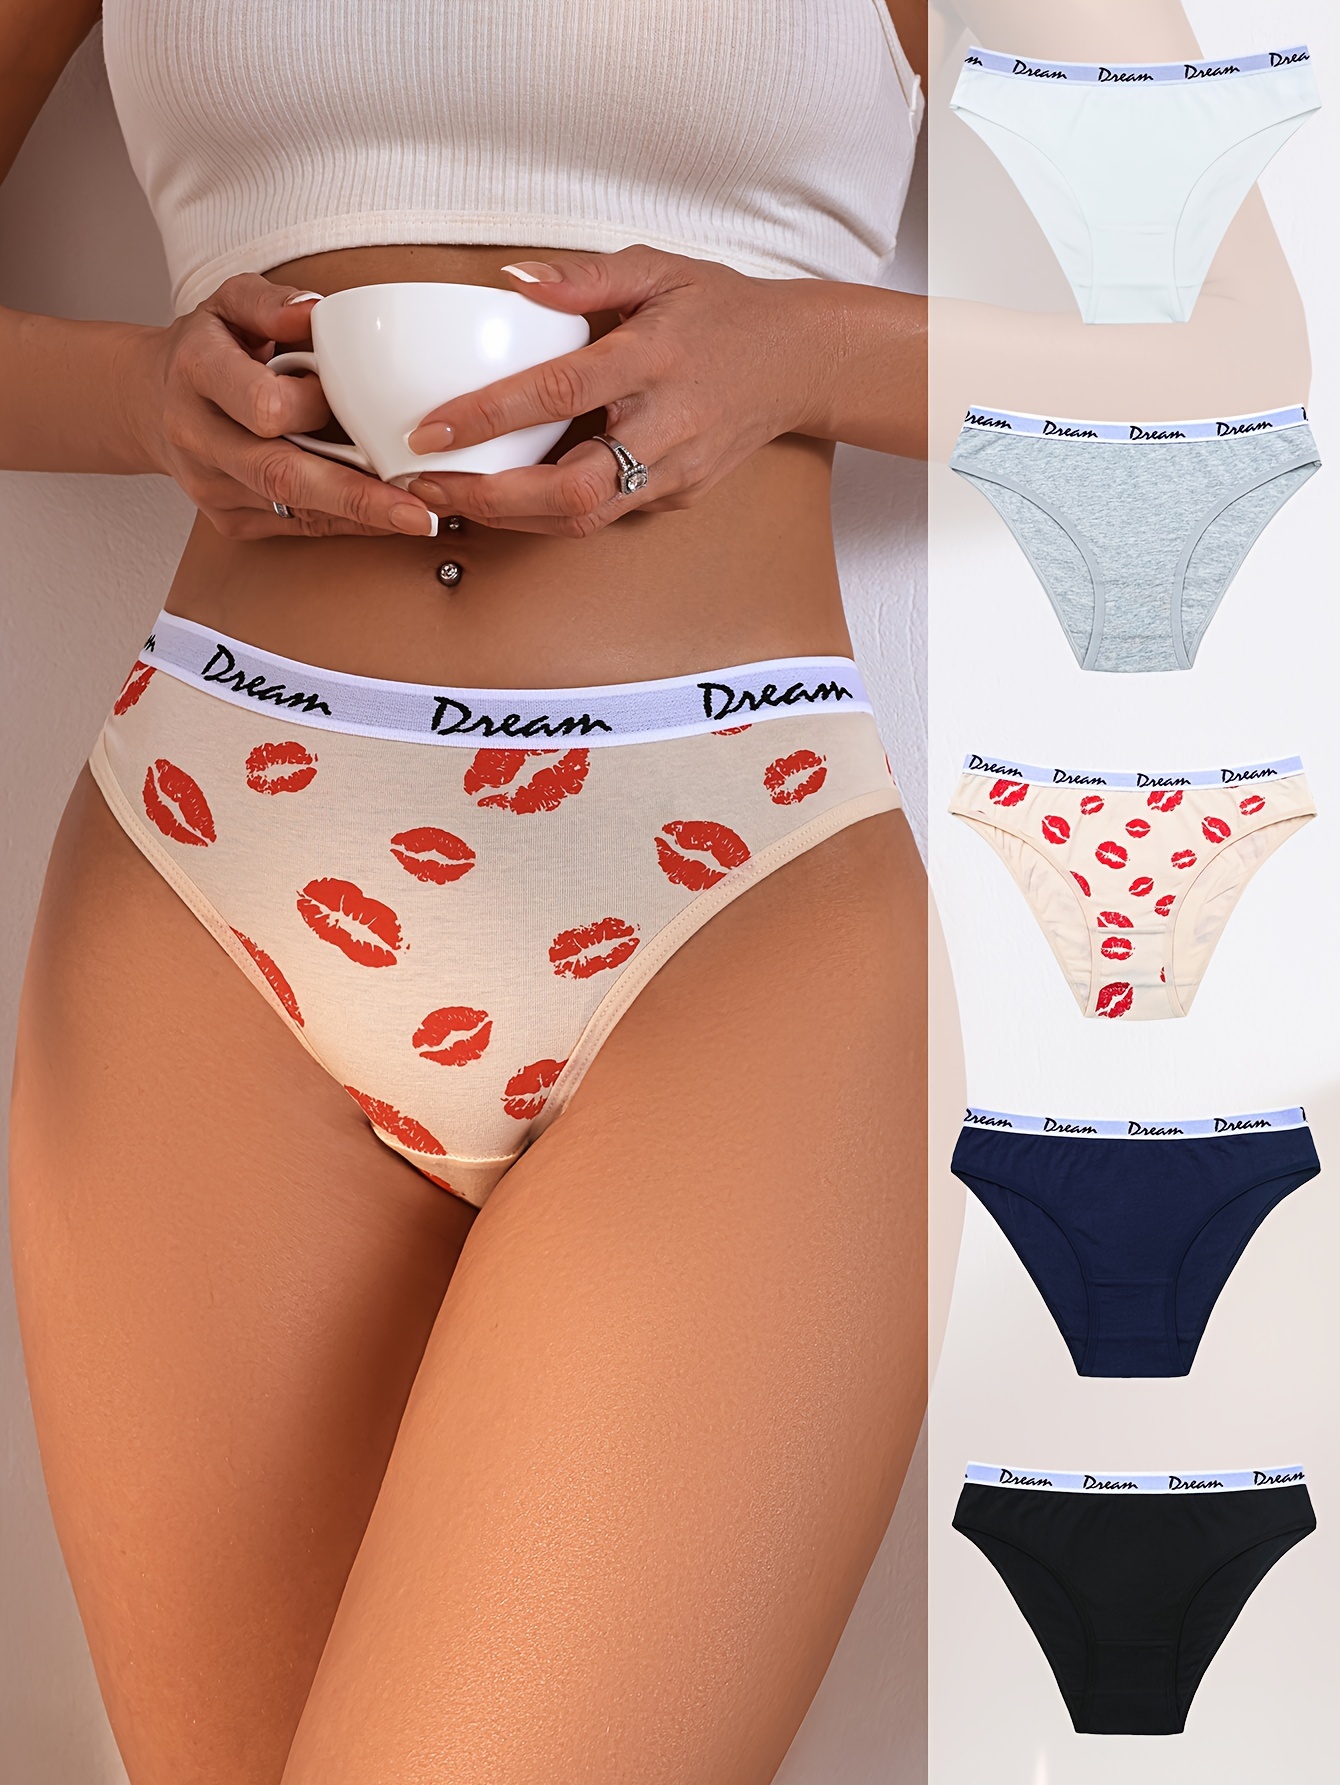 Creativity Print Red Lips Panties Women Lingerie Sexy Underwear